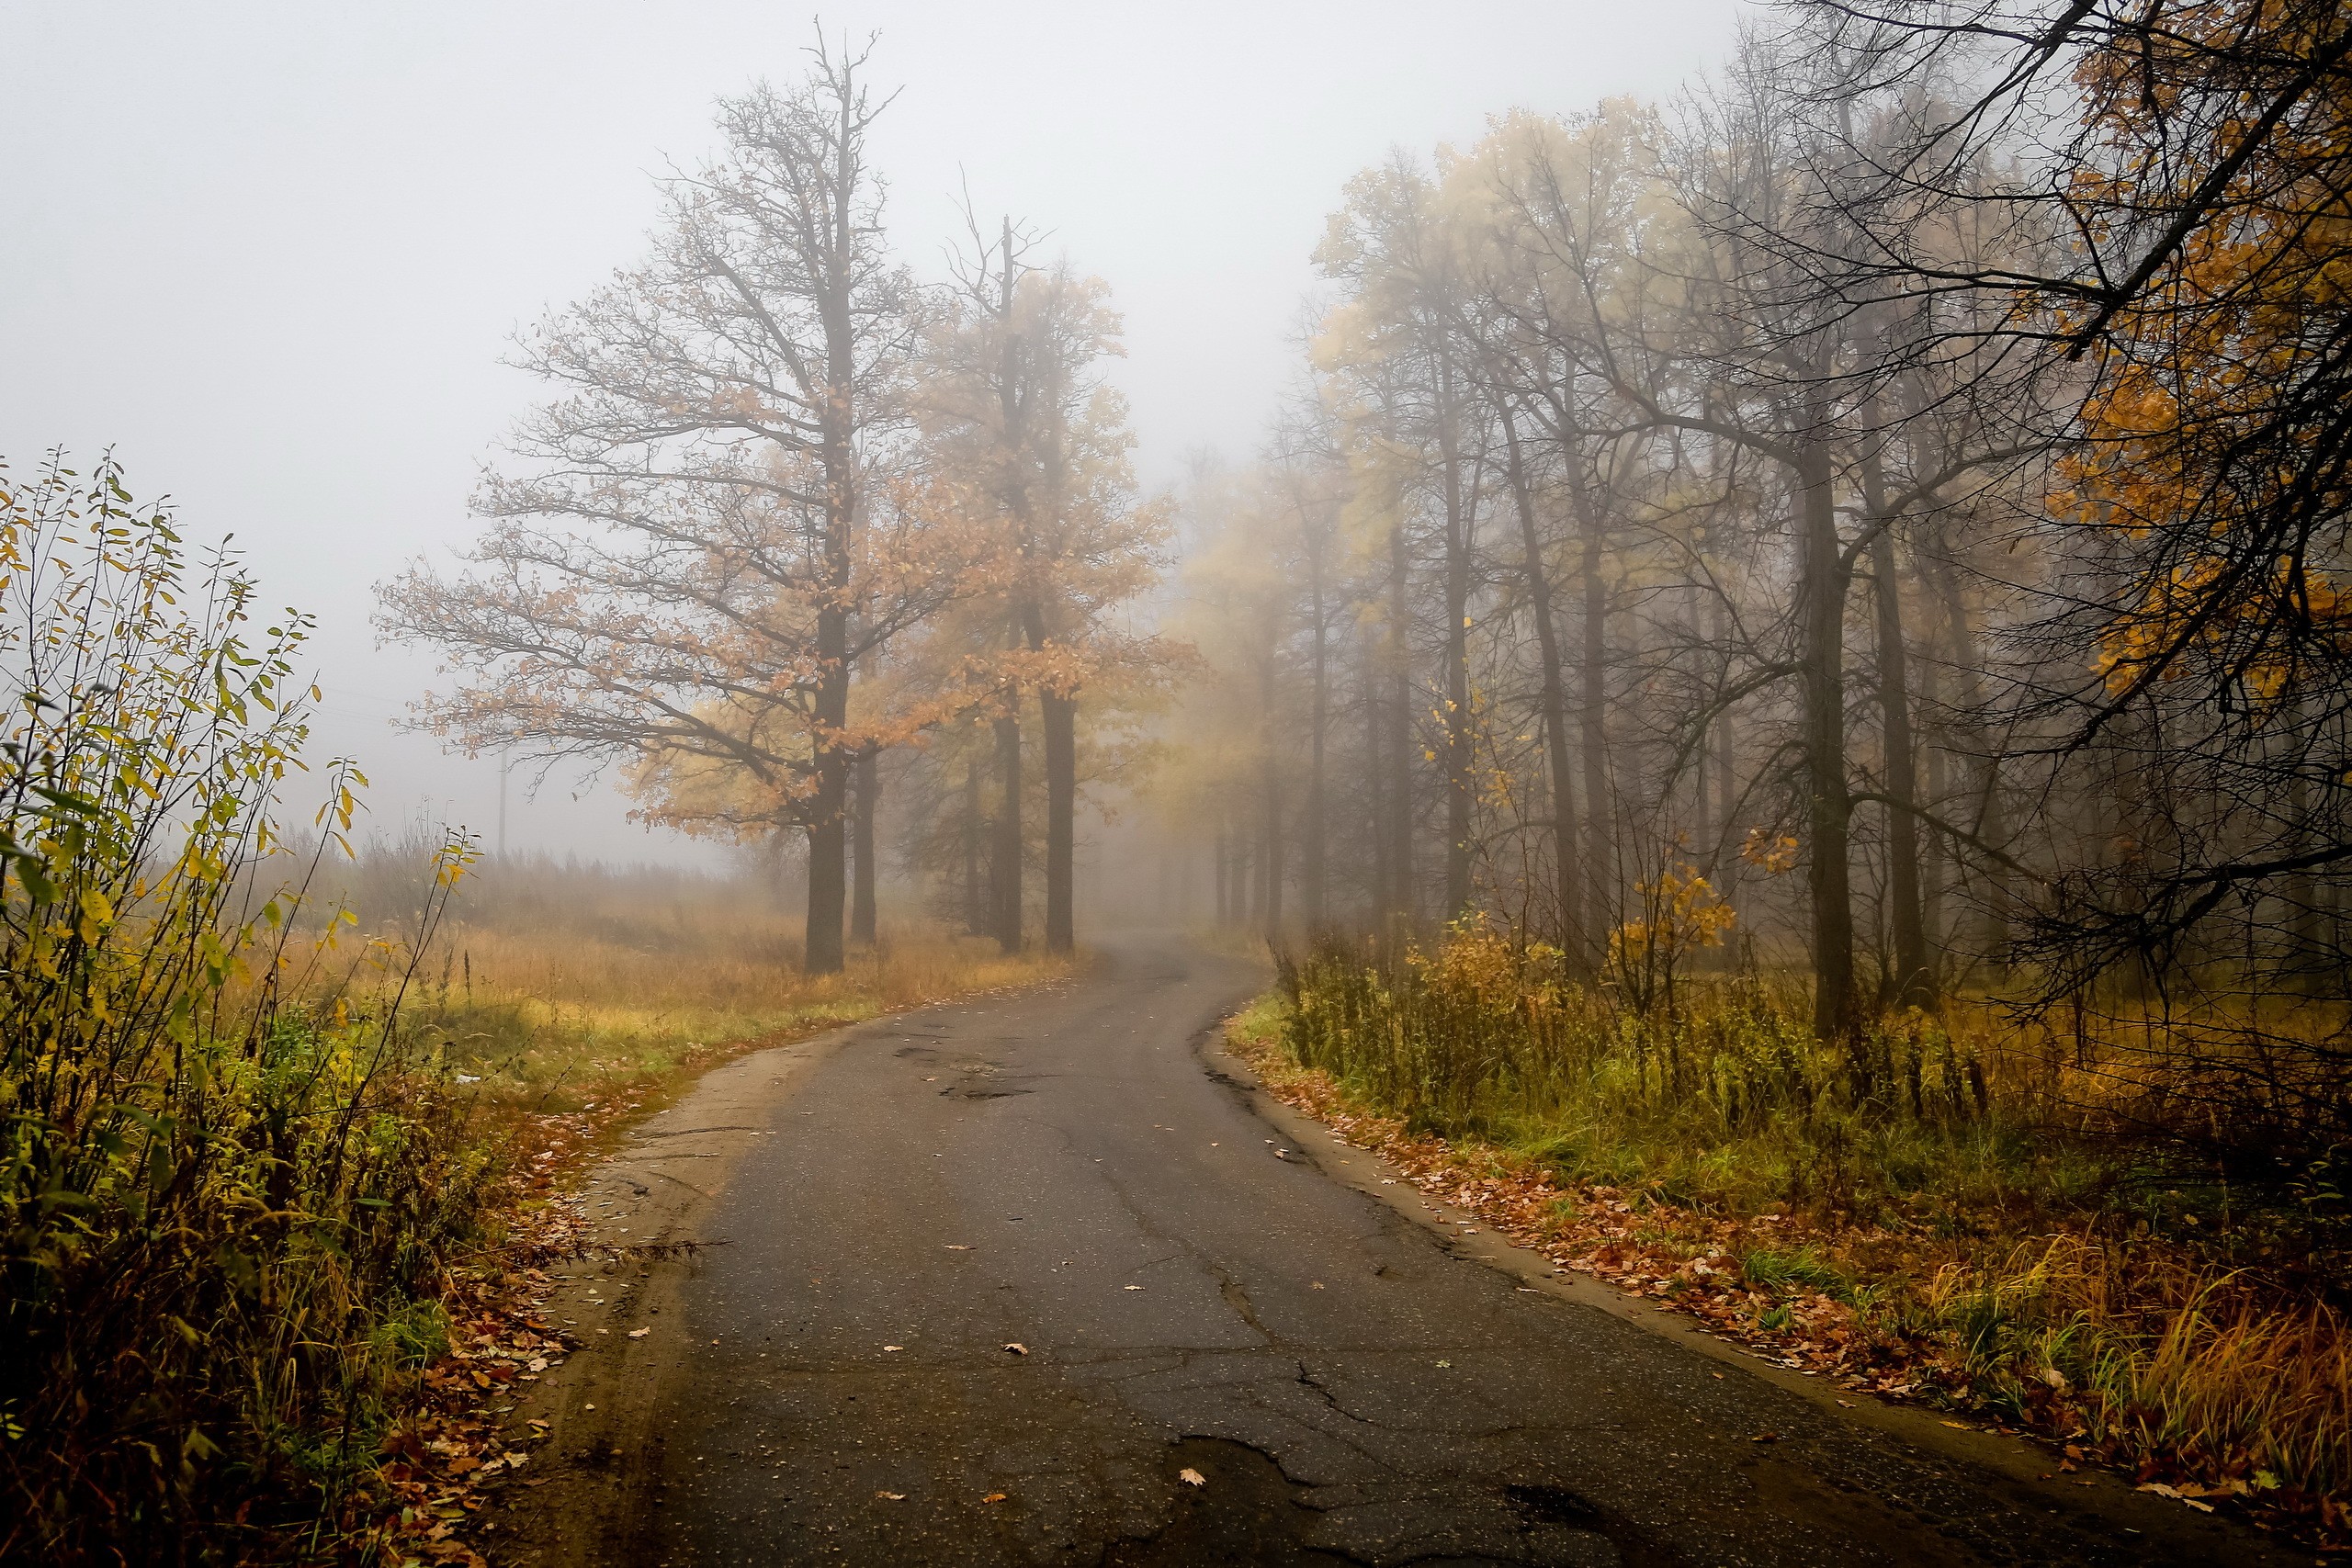 General 2560x1707 trees road outdoors mist fall asphalt nature